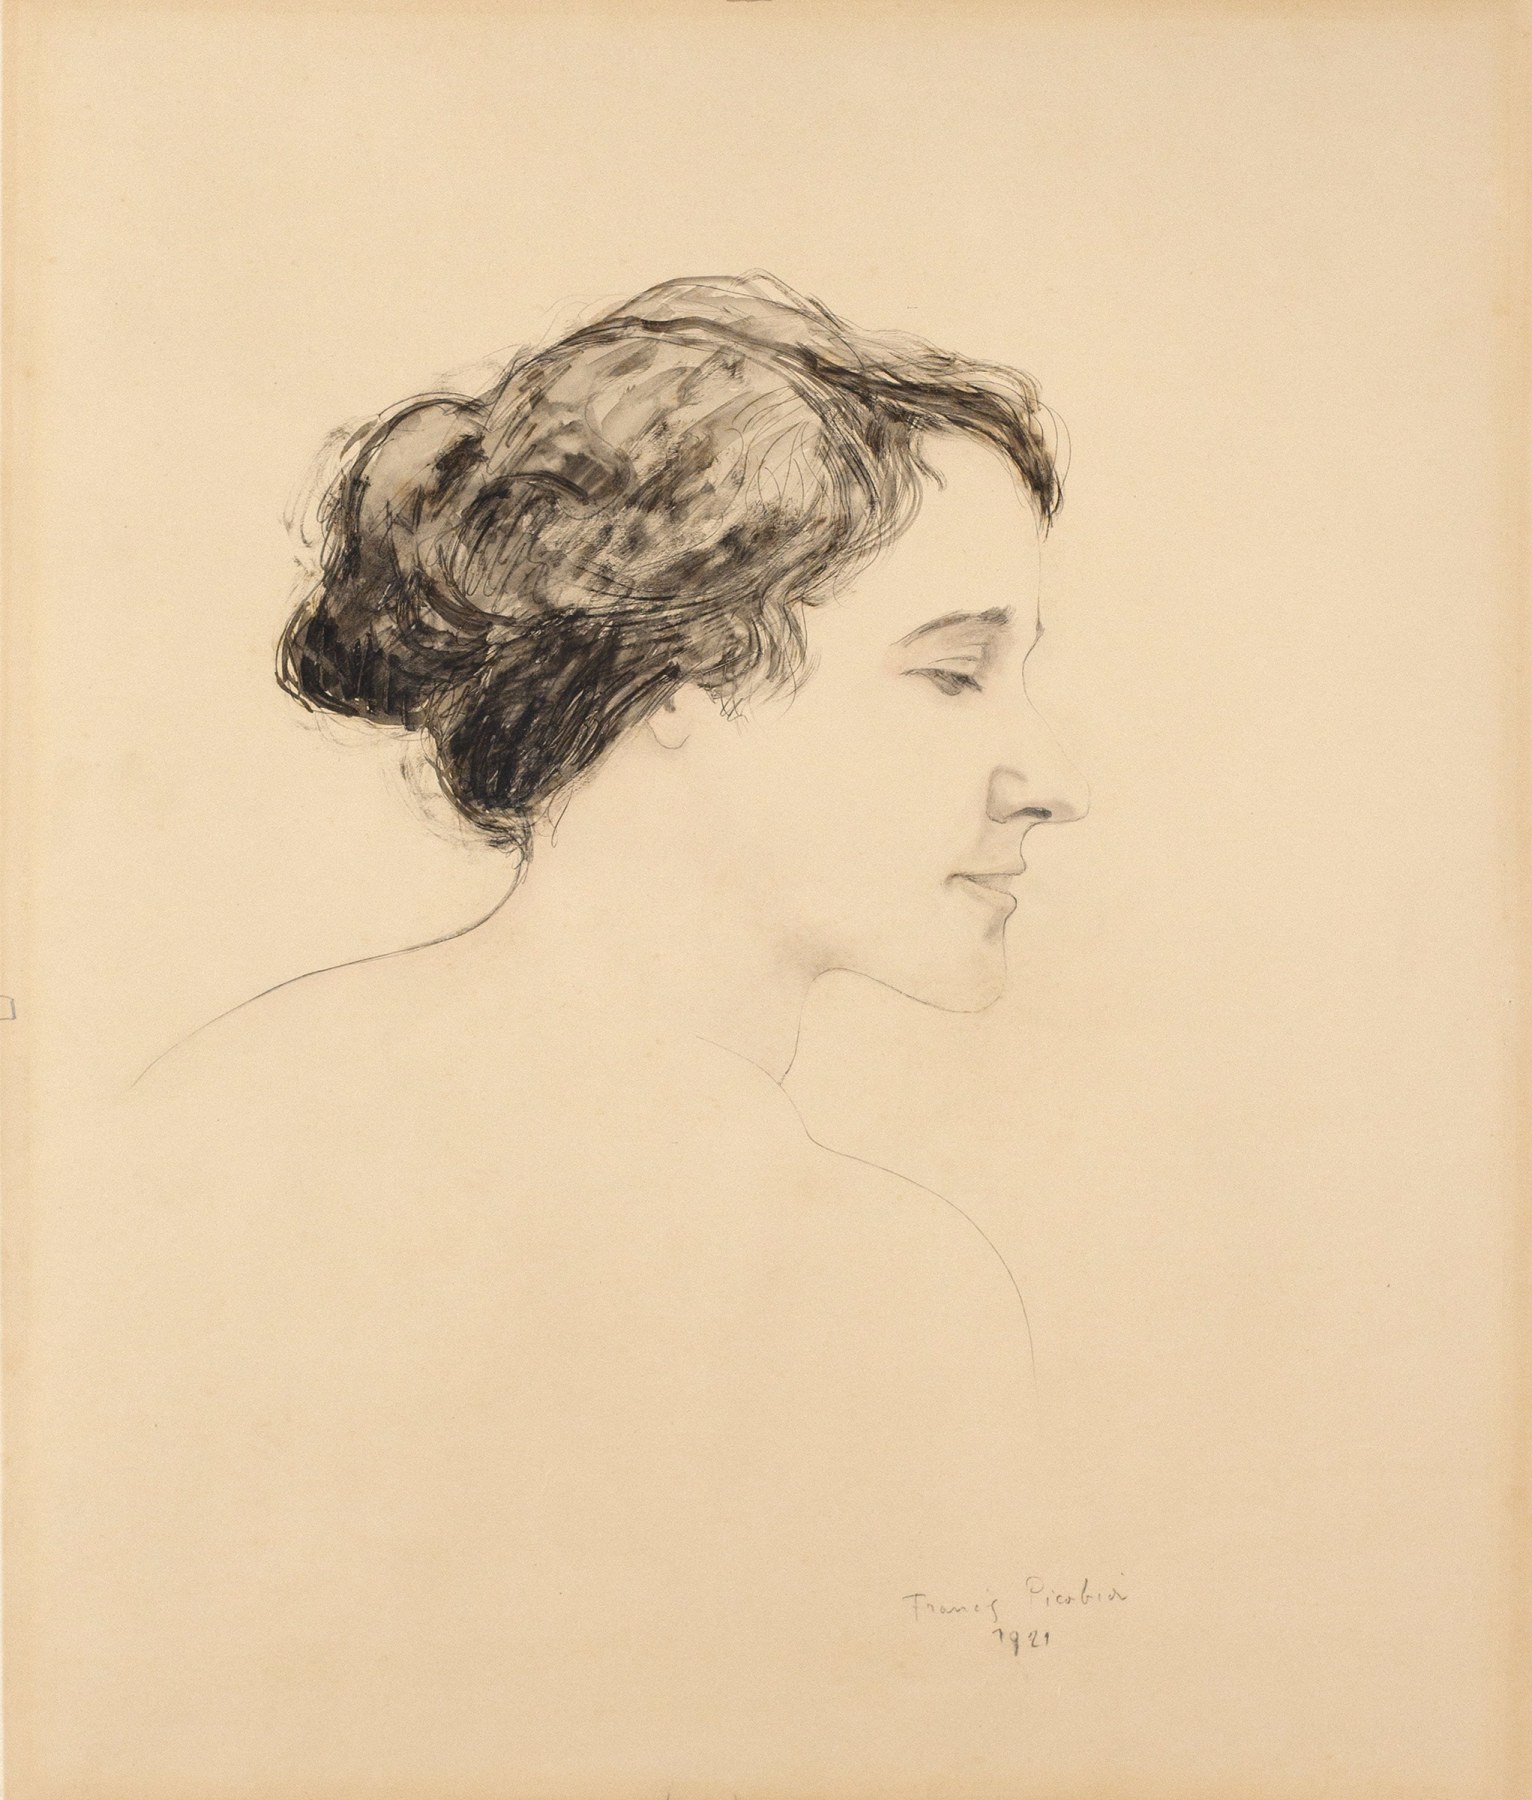 Francis Picabia

&amp;ldquo;Untitled (T&amp;ecirc;te de femme)&amp;rdquo;, 1921

Ink, pencil, gouache on paper

24 3/4 x 19 inches

63 x 48 cm

PIZ 164
$125,000